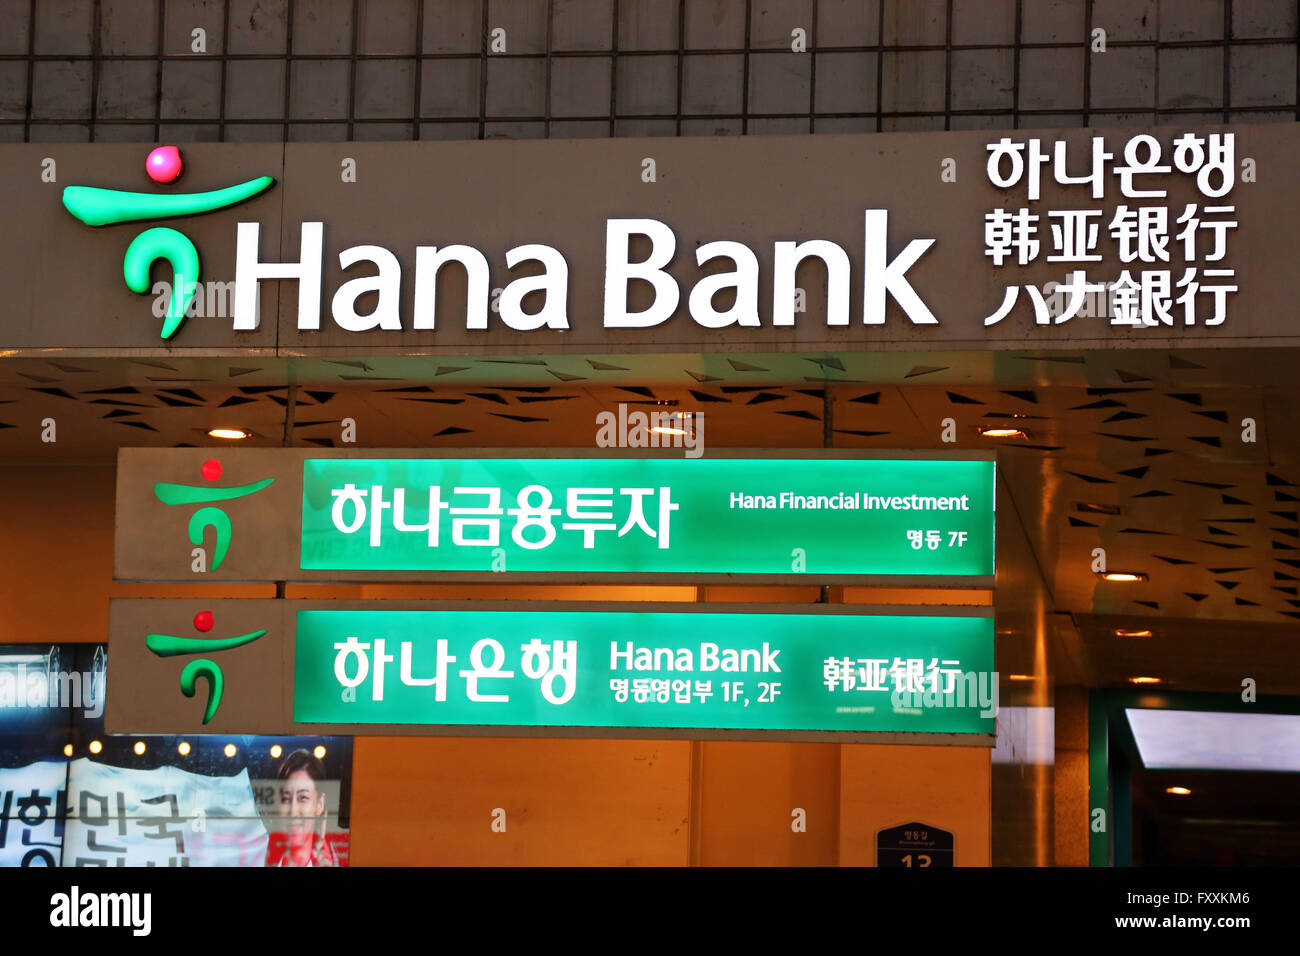 Hana Bank sign in Seoul, Korea Stock Photo Alamy